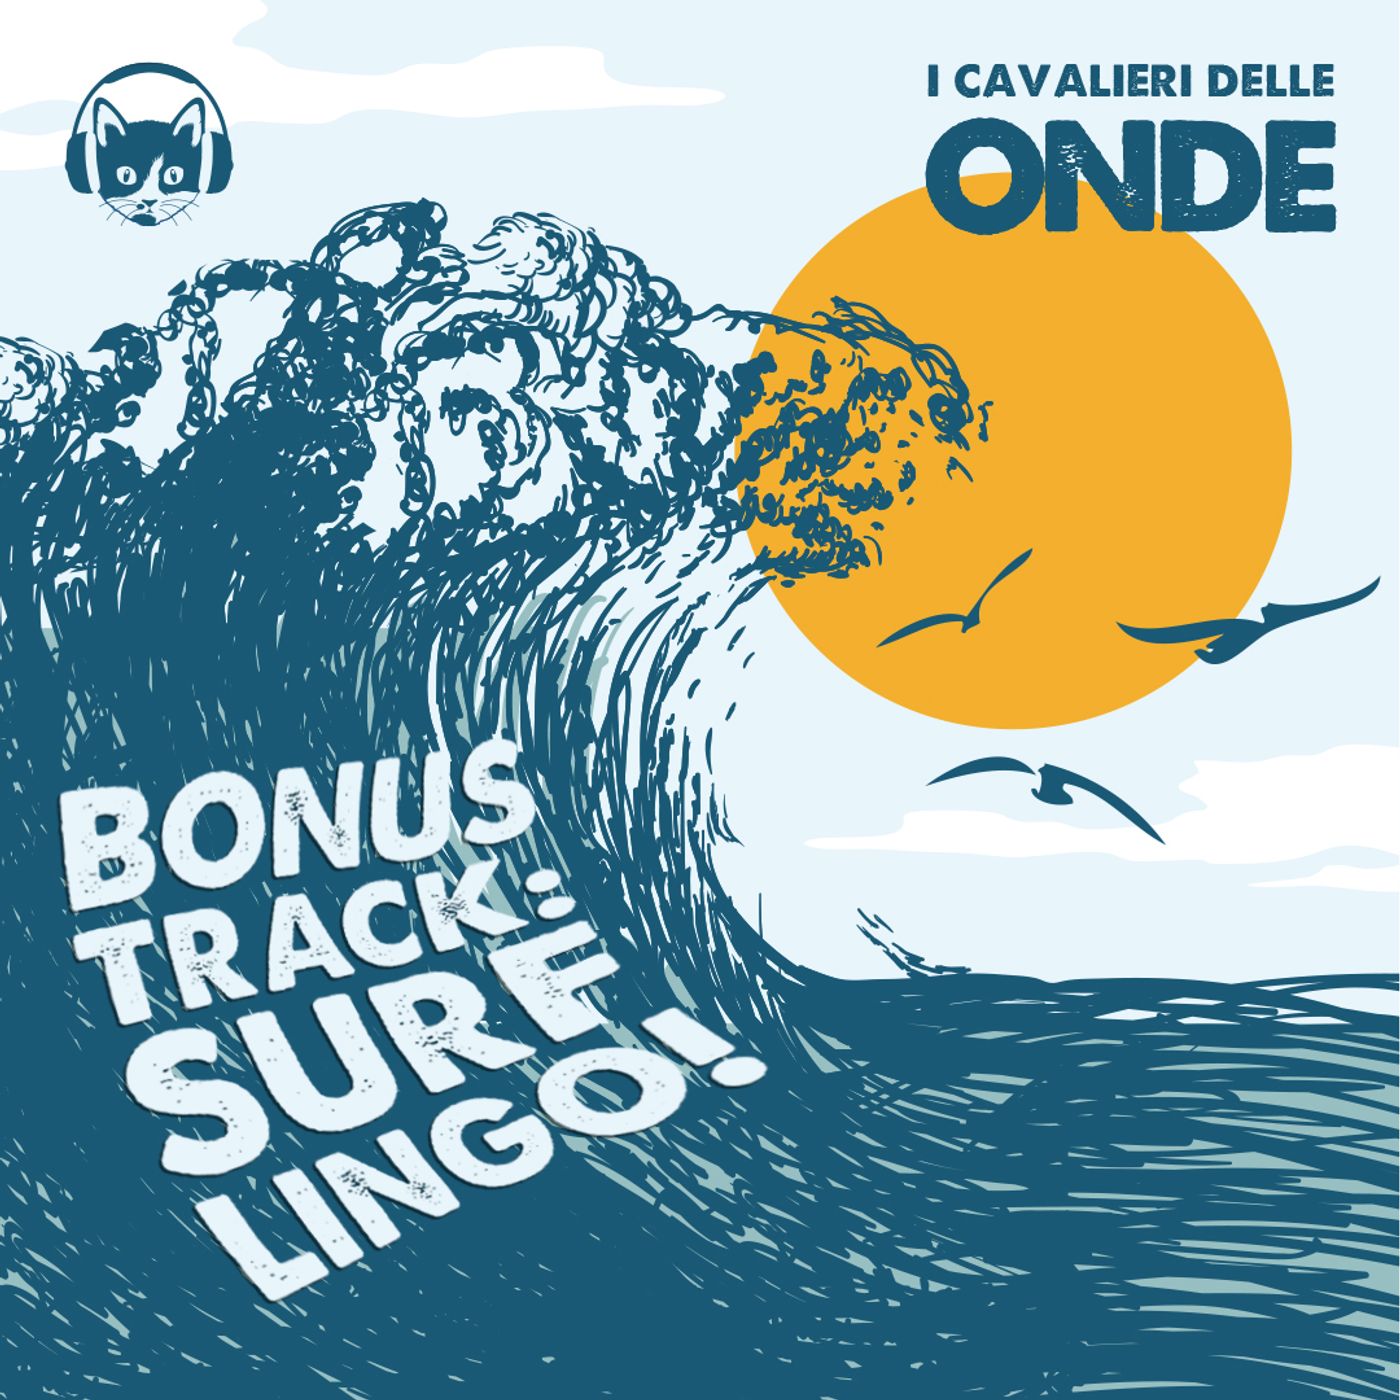 Bonus track: Surf Lingo!